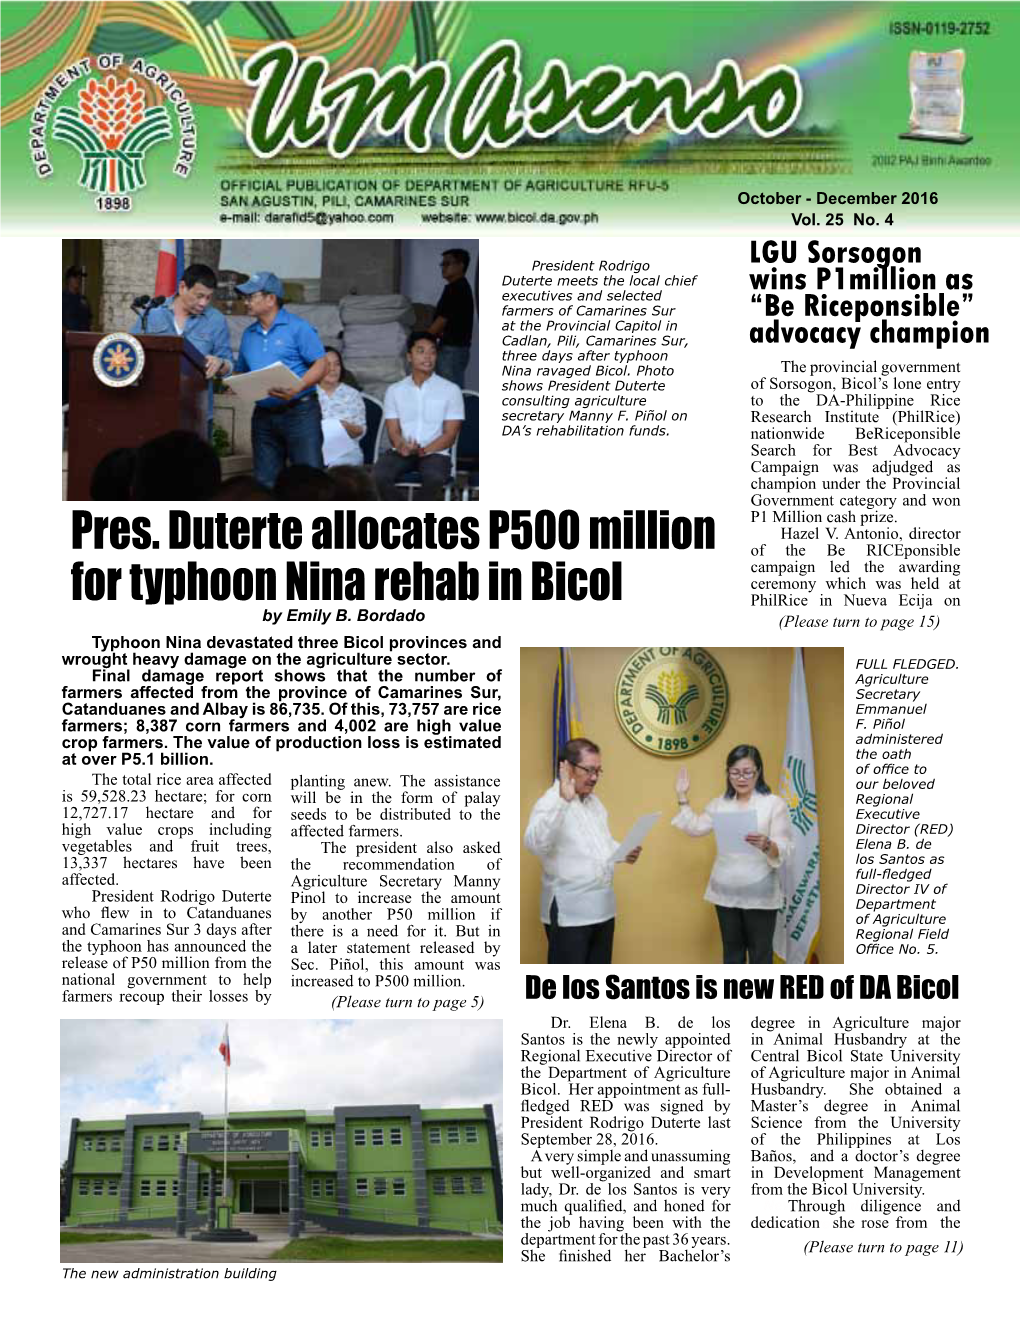 Pres. Duterte Allocates P500 Million for Typhoon Nina Rehab in Bicol